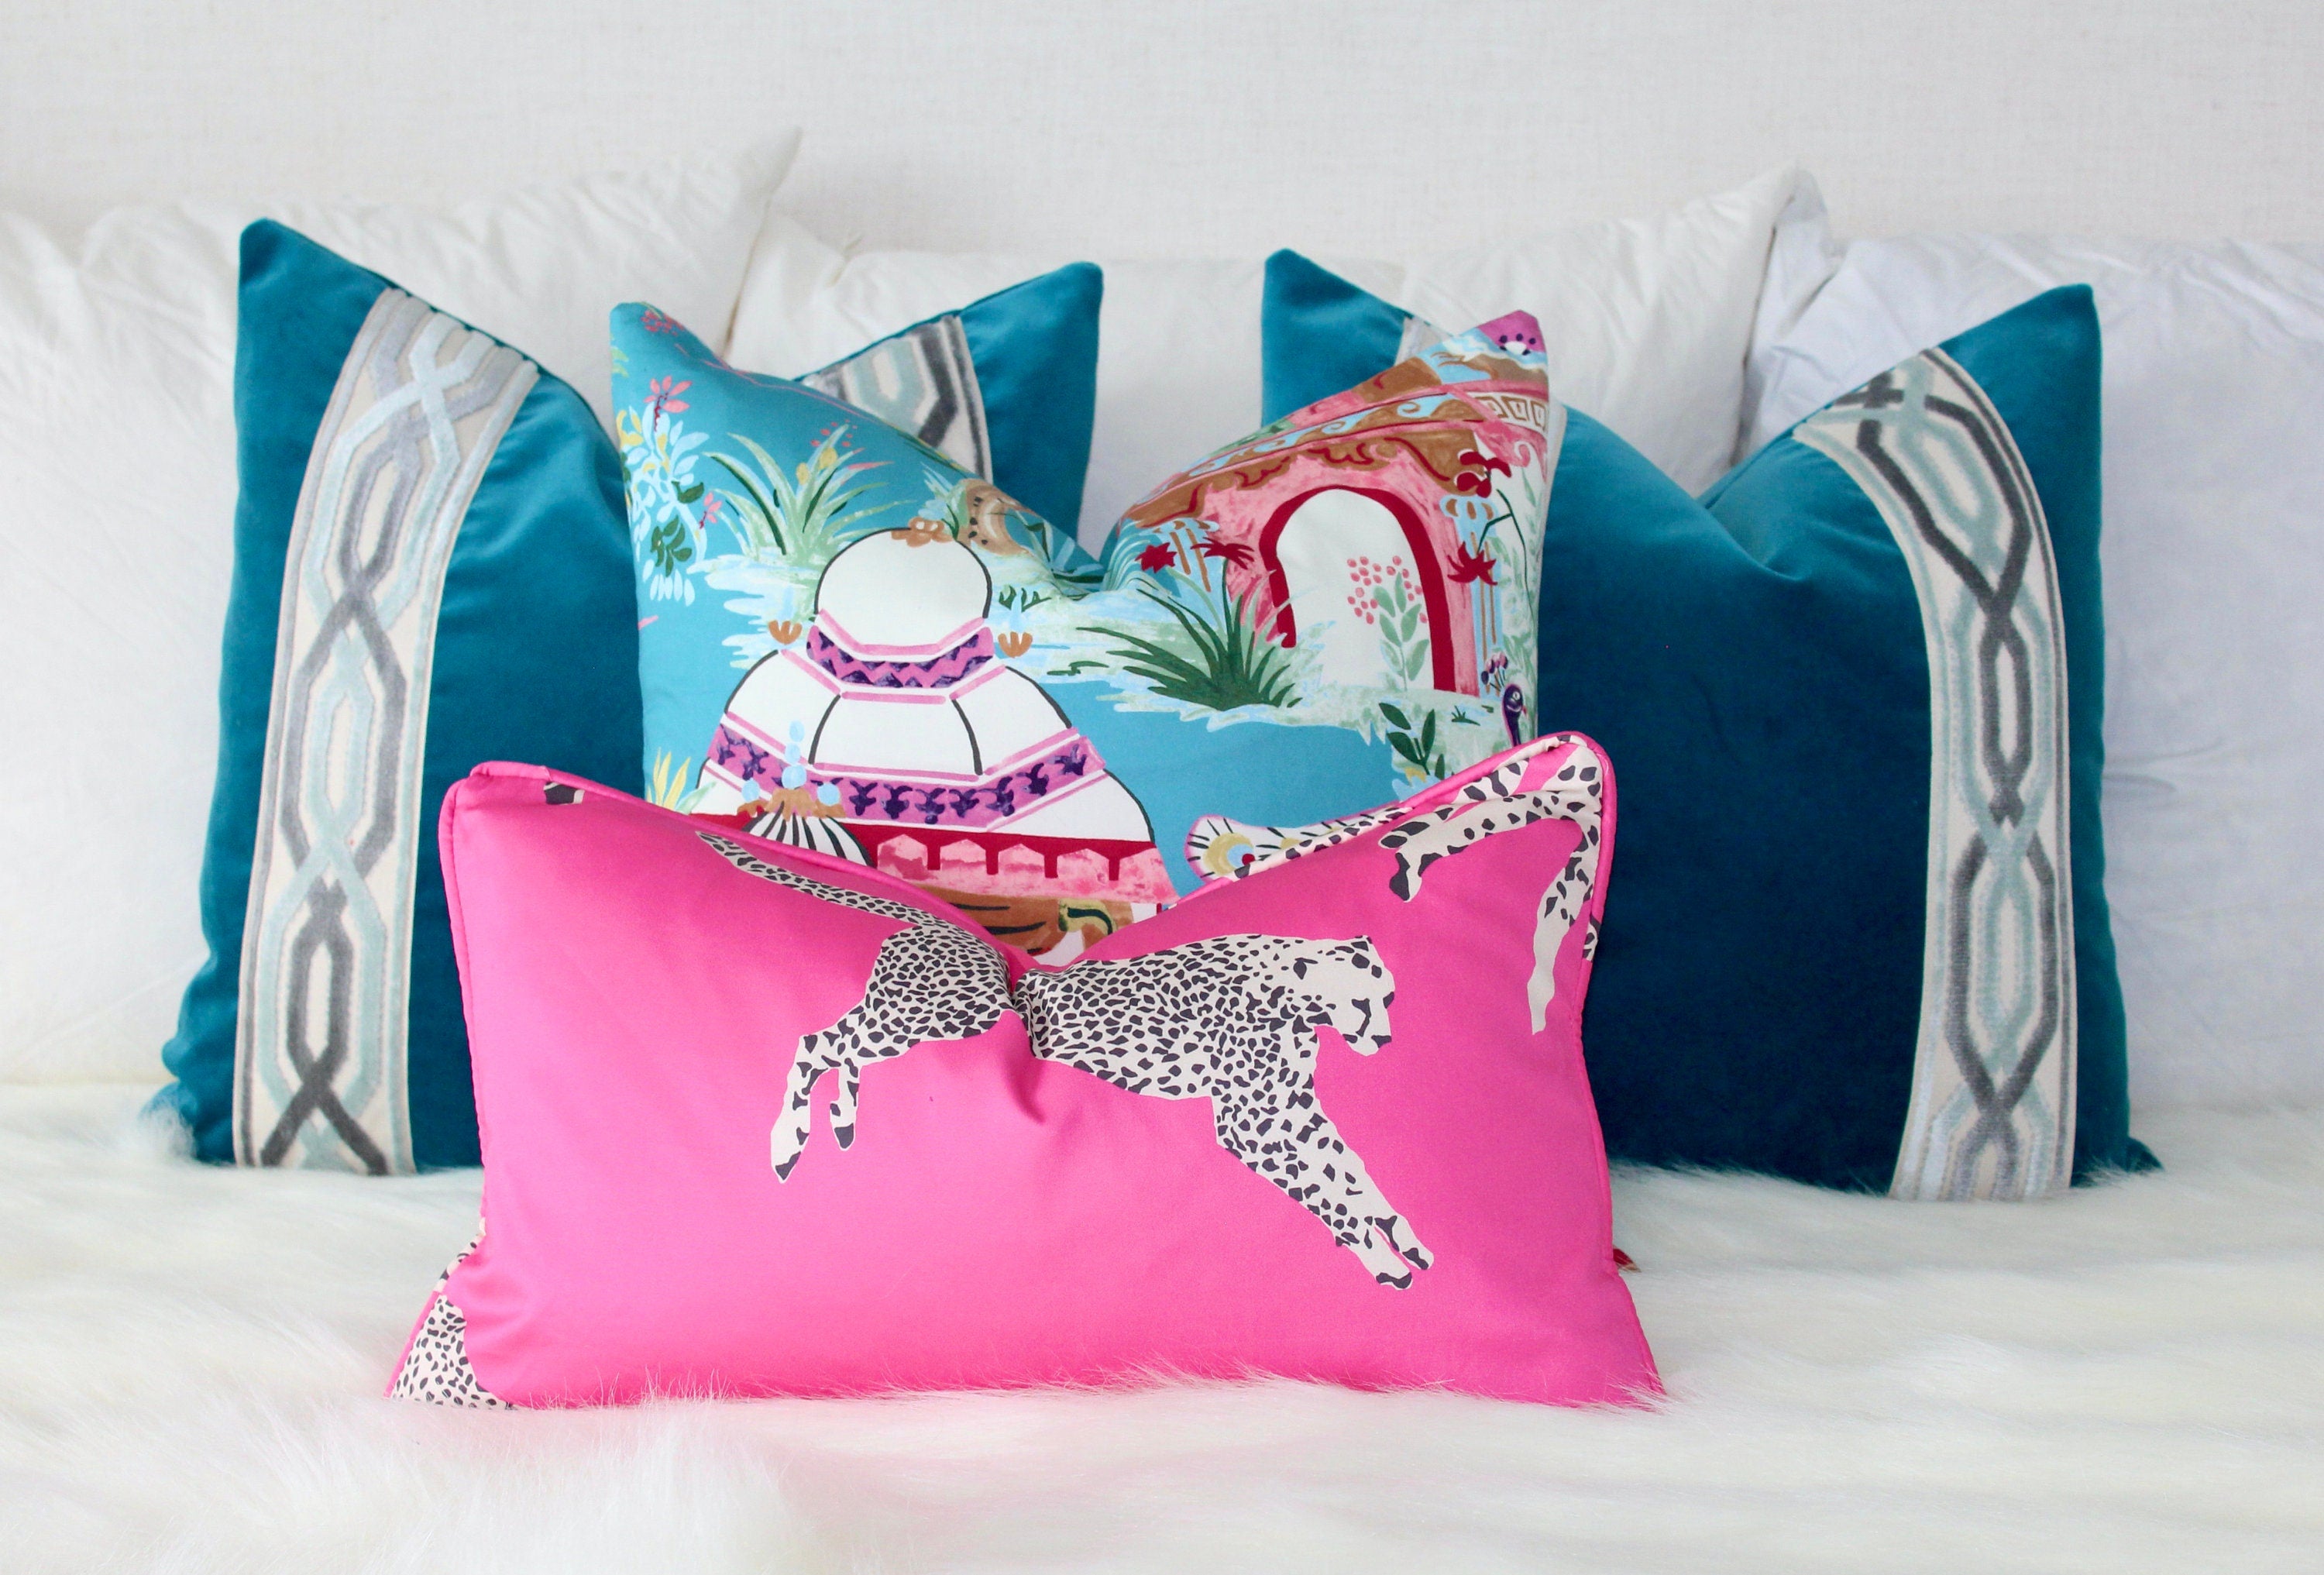 Leaping Cheetah Pink Pillow. Scalamandre Pillow, Bubblegum Pink Pillow, Animal Print Cushion, Designer Pillow, Euro Sham, Long Lumbar Pillow